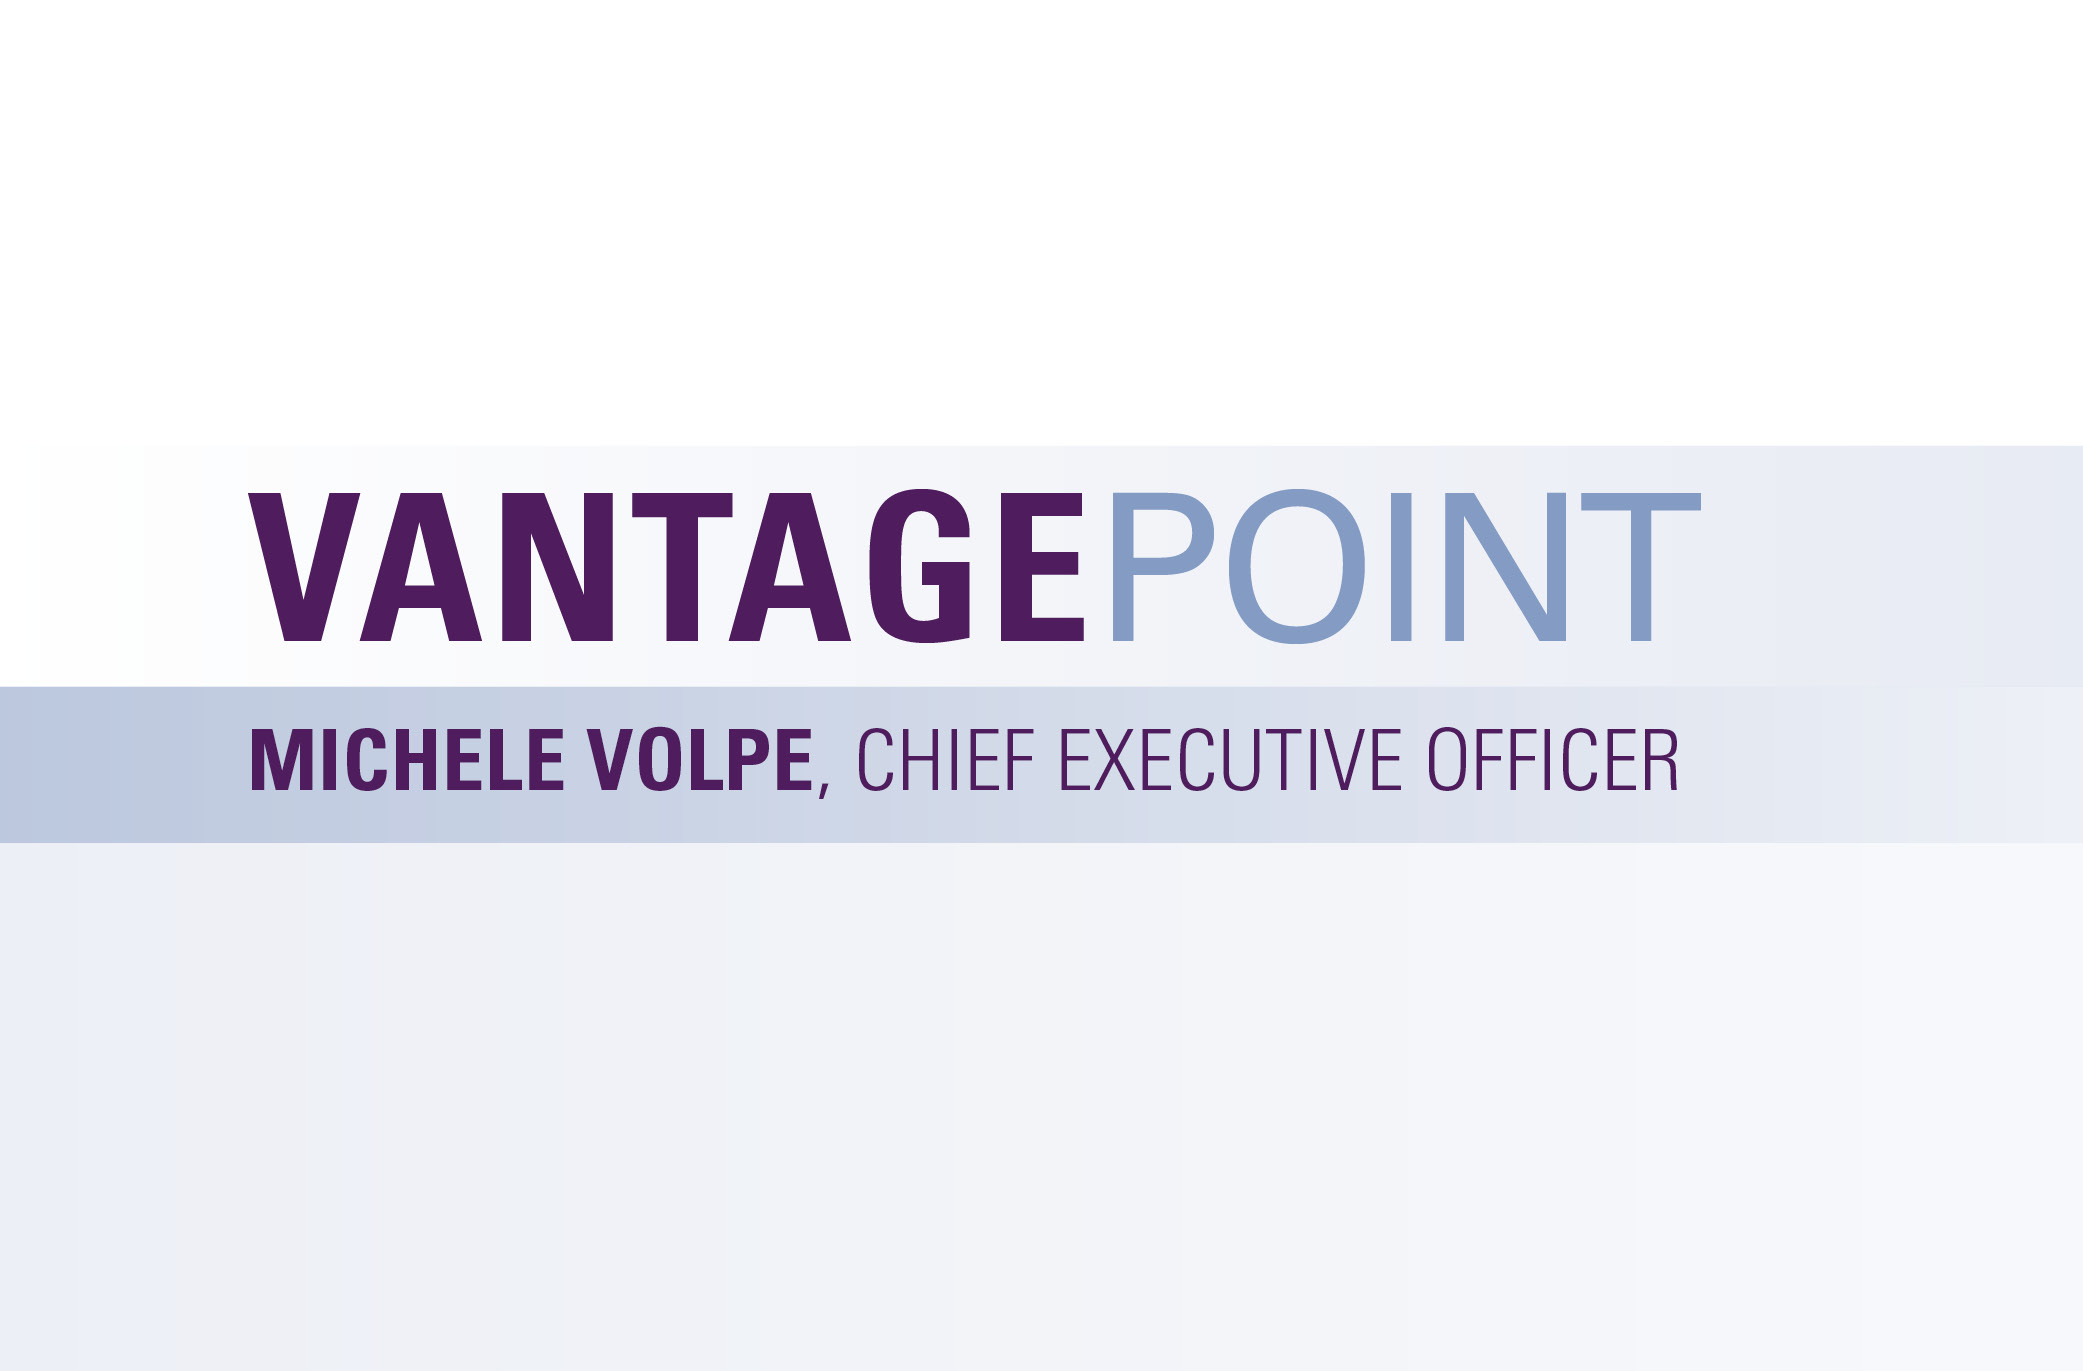 PPMC CEO Michele Volpe's Vantage Point column